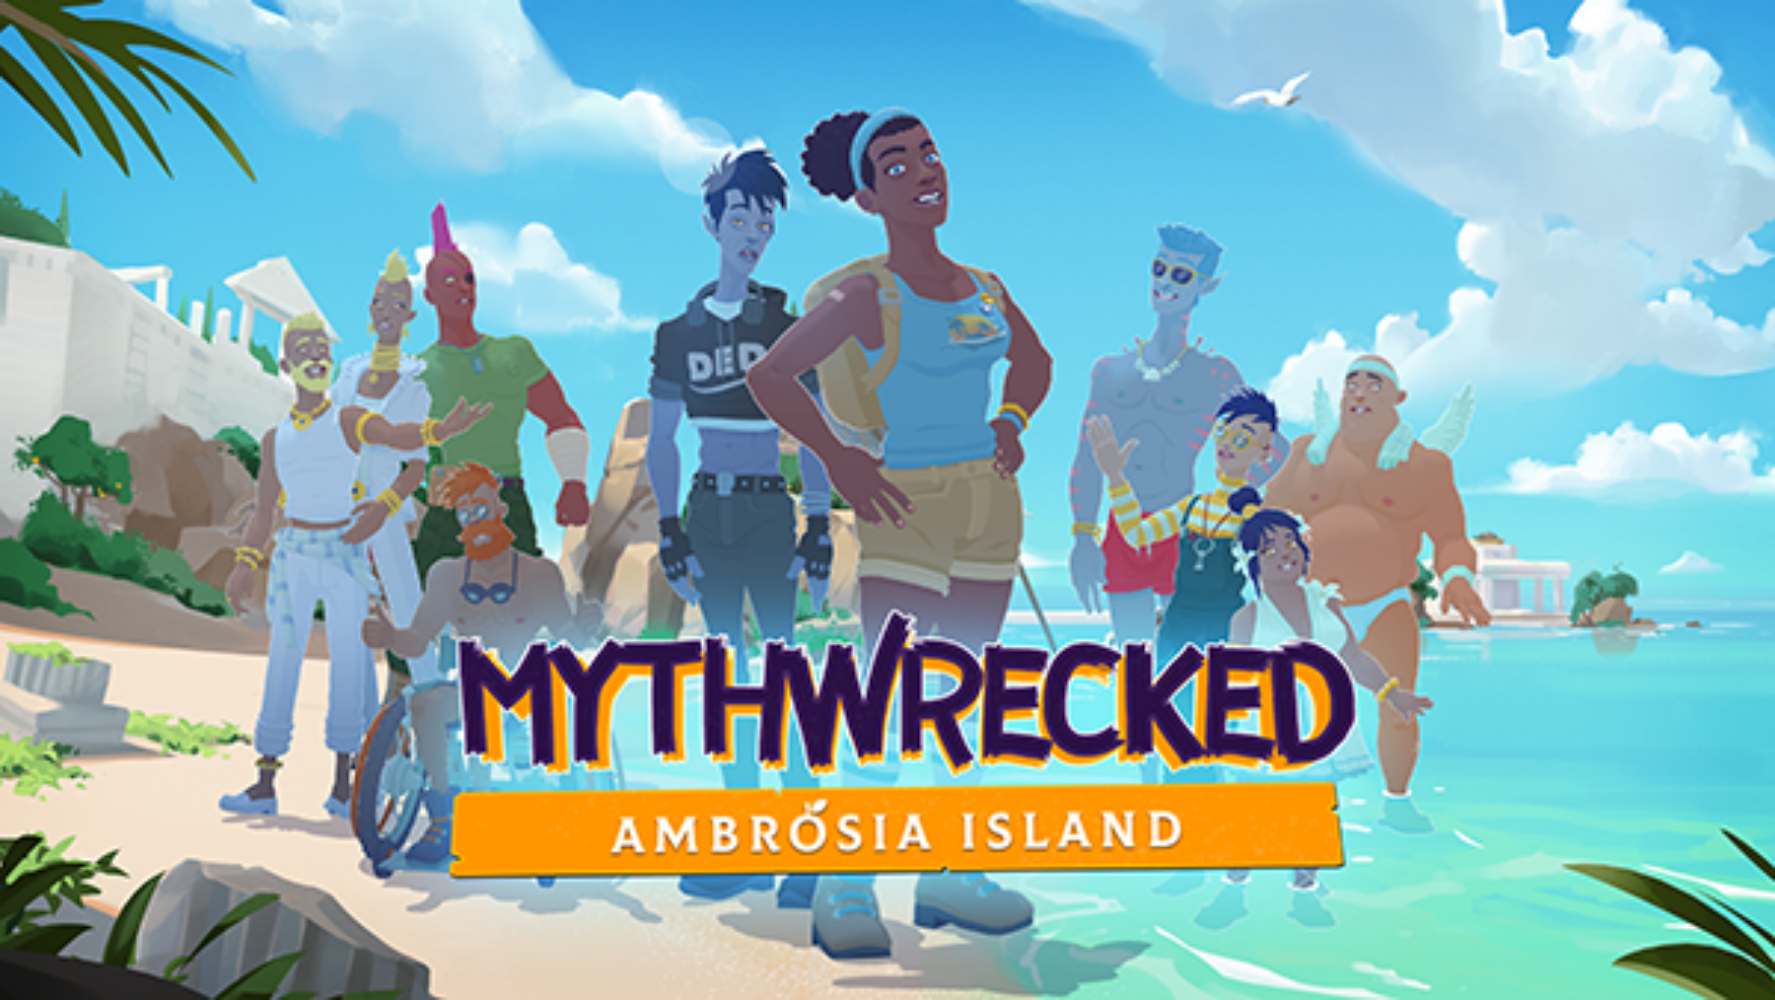 Mythwrecked Ambrosia Island: